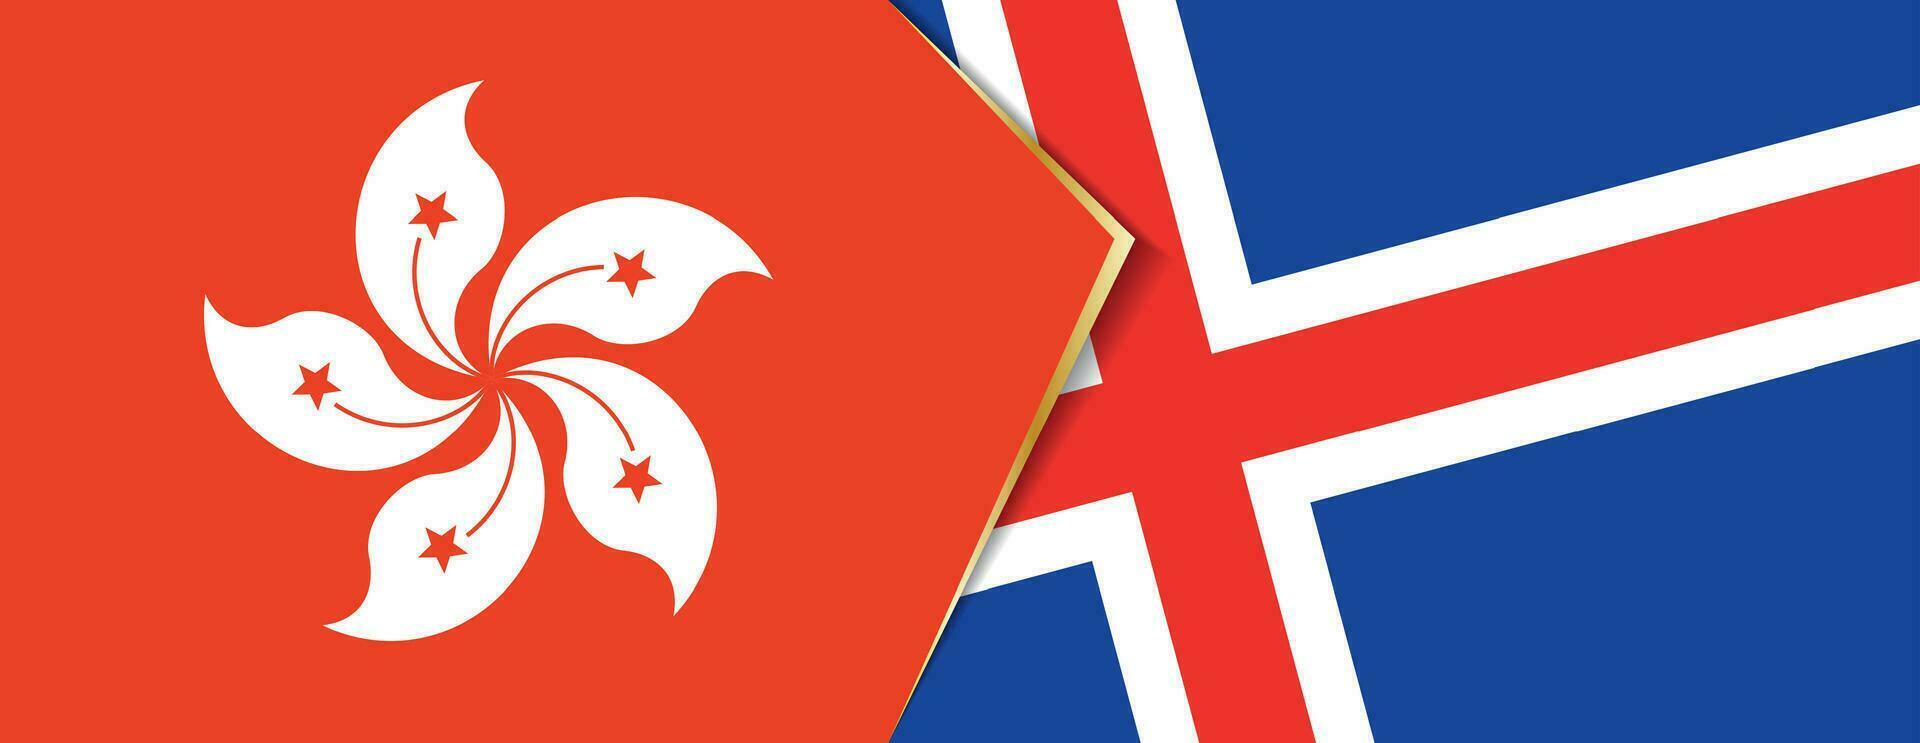 hong Kong en IJsland vlaggen, twee vector vlaggen.